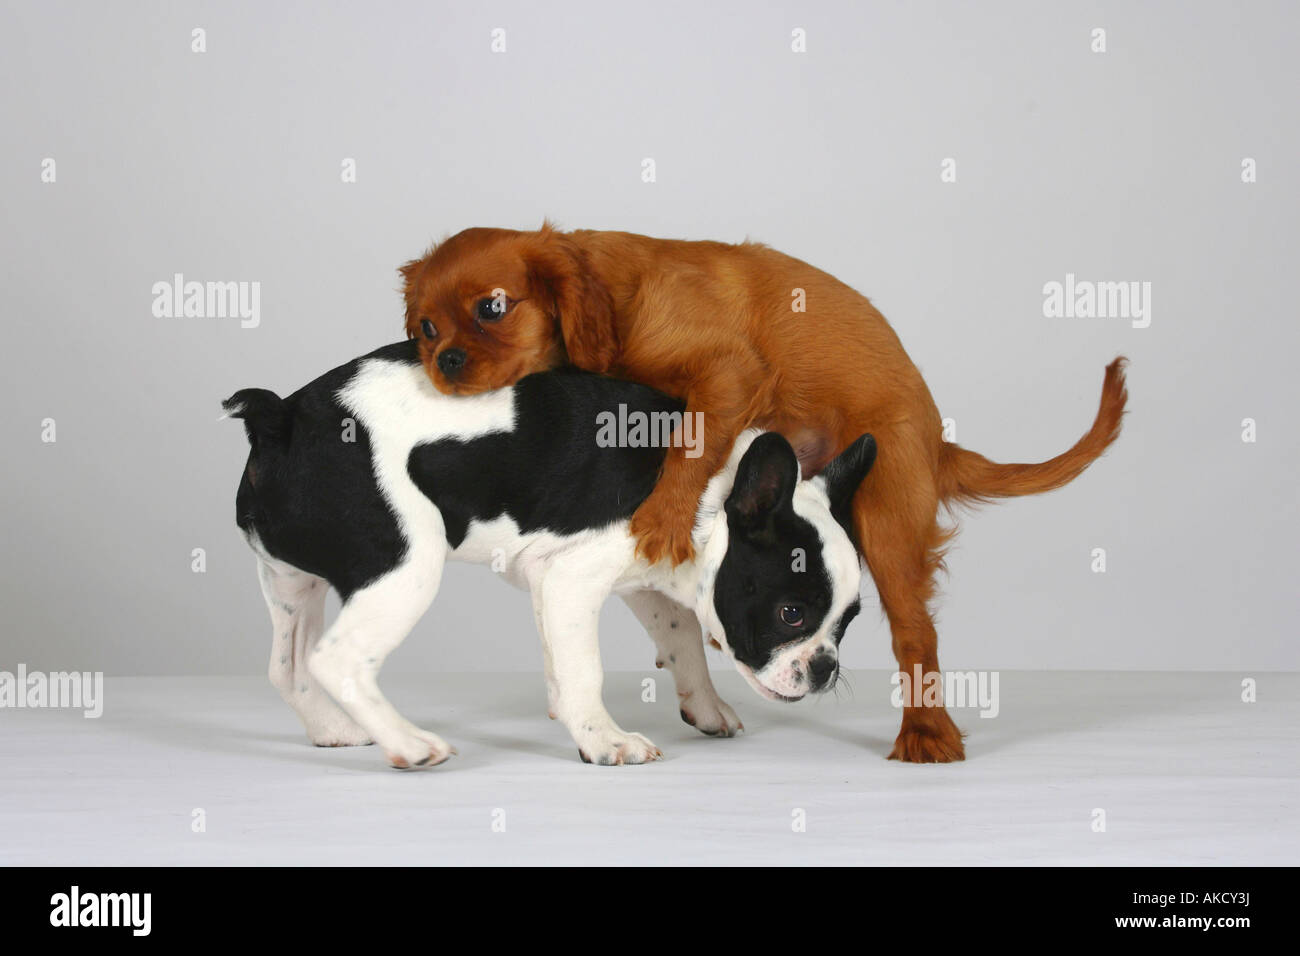 french bulldog and cavalier king charles mix